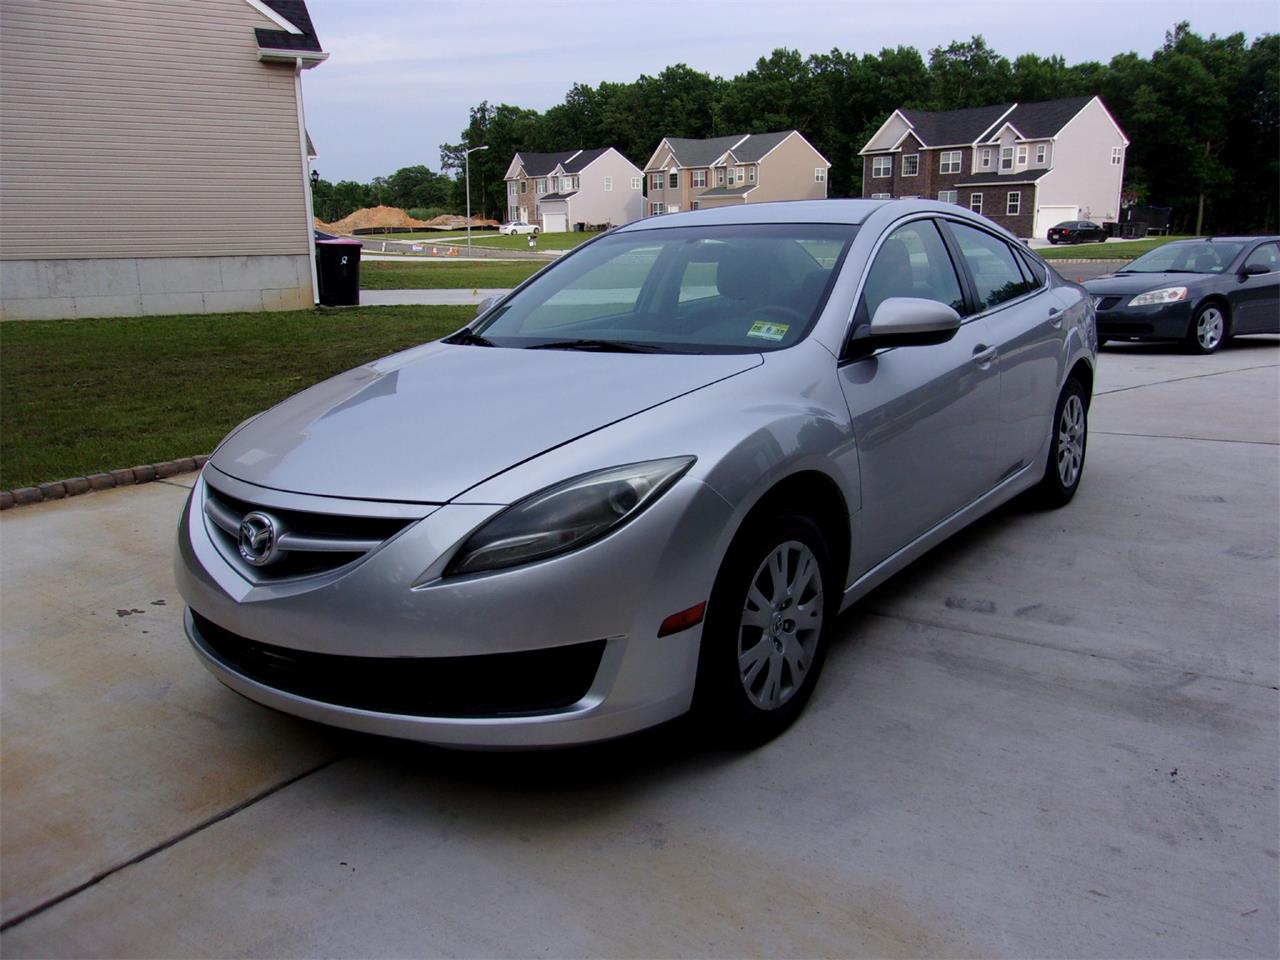 2011 Mazda Mazda6 for Sale | ClassicCars.com | CC-1136534